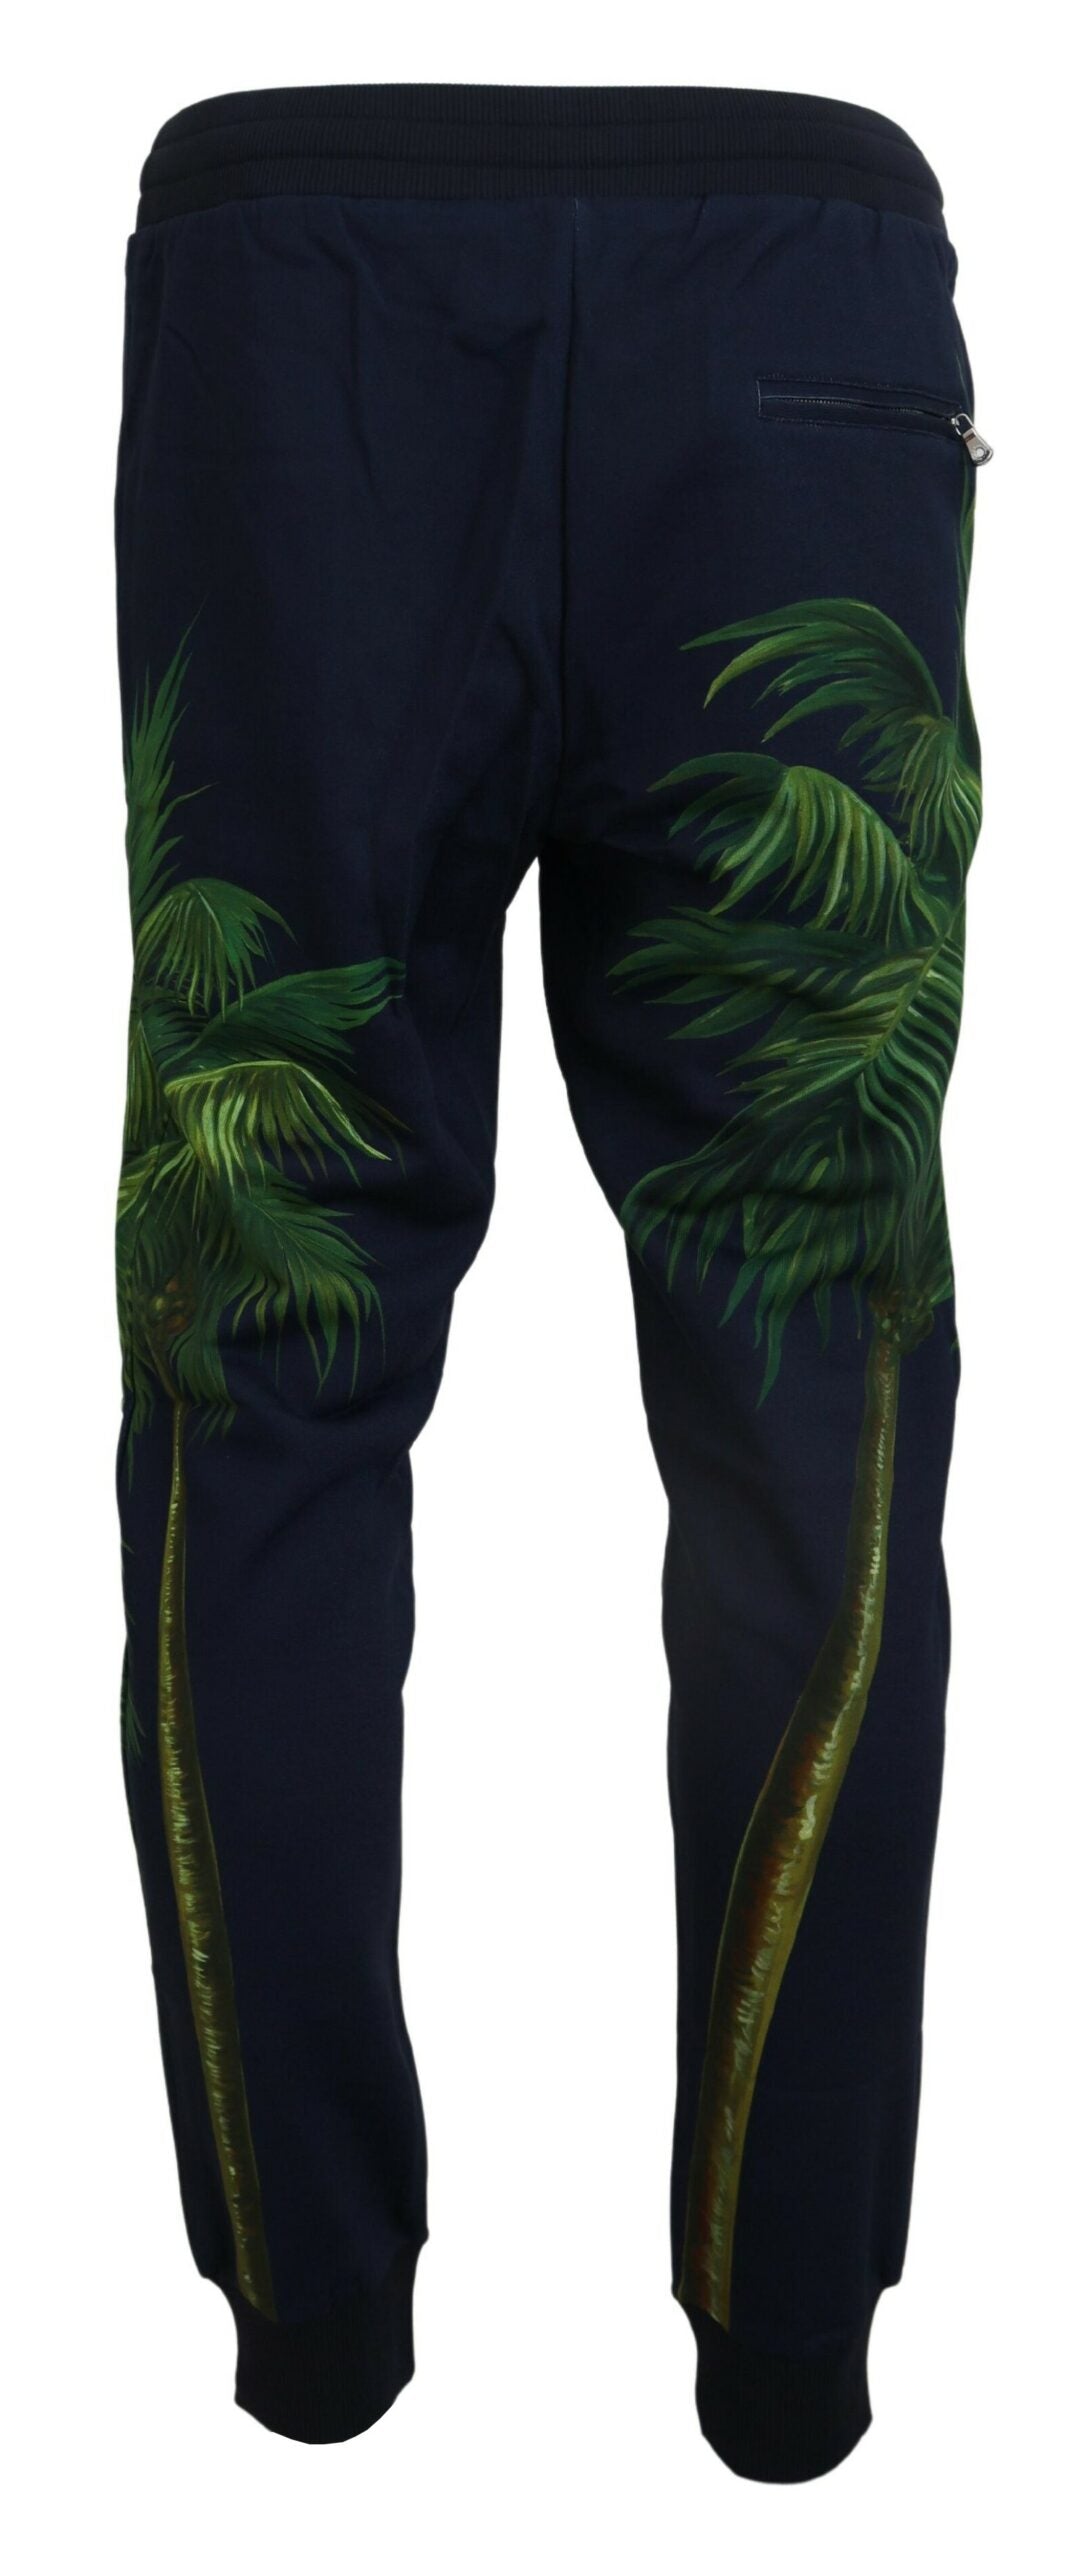 Elegant Cotton Jogging Pants with Print Design